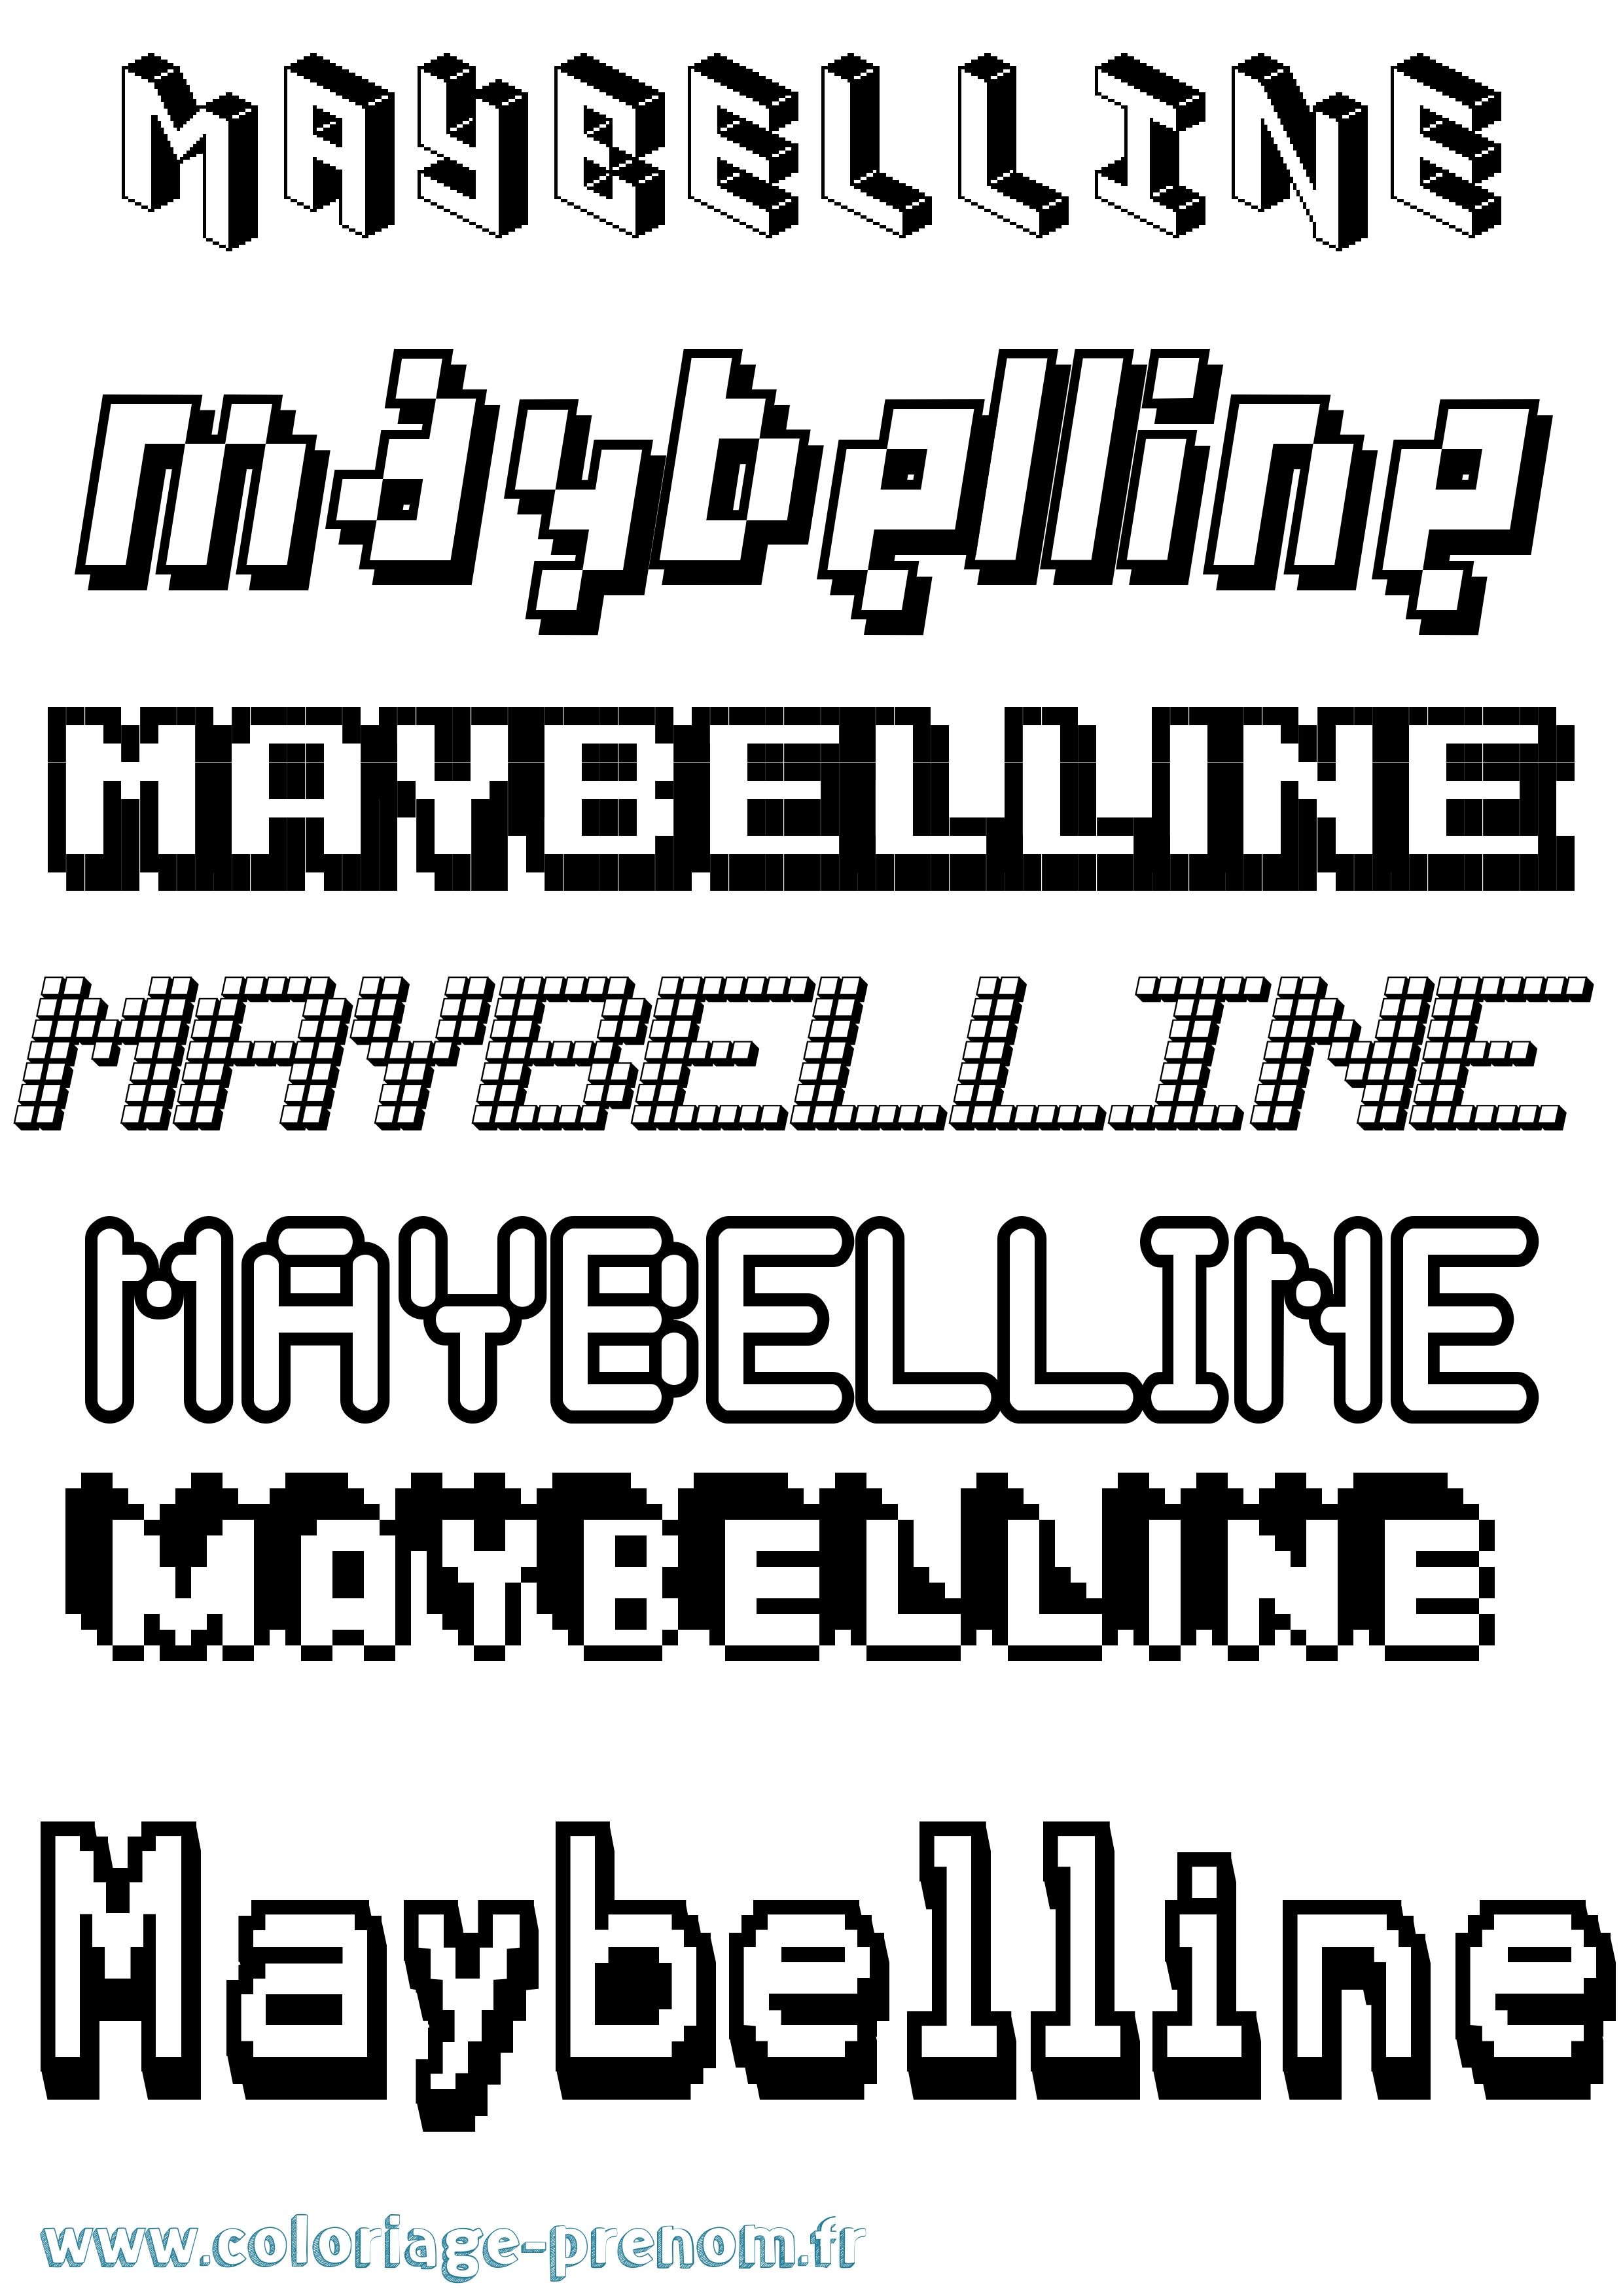 Coloriage prénom Maybelline Pixel